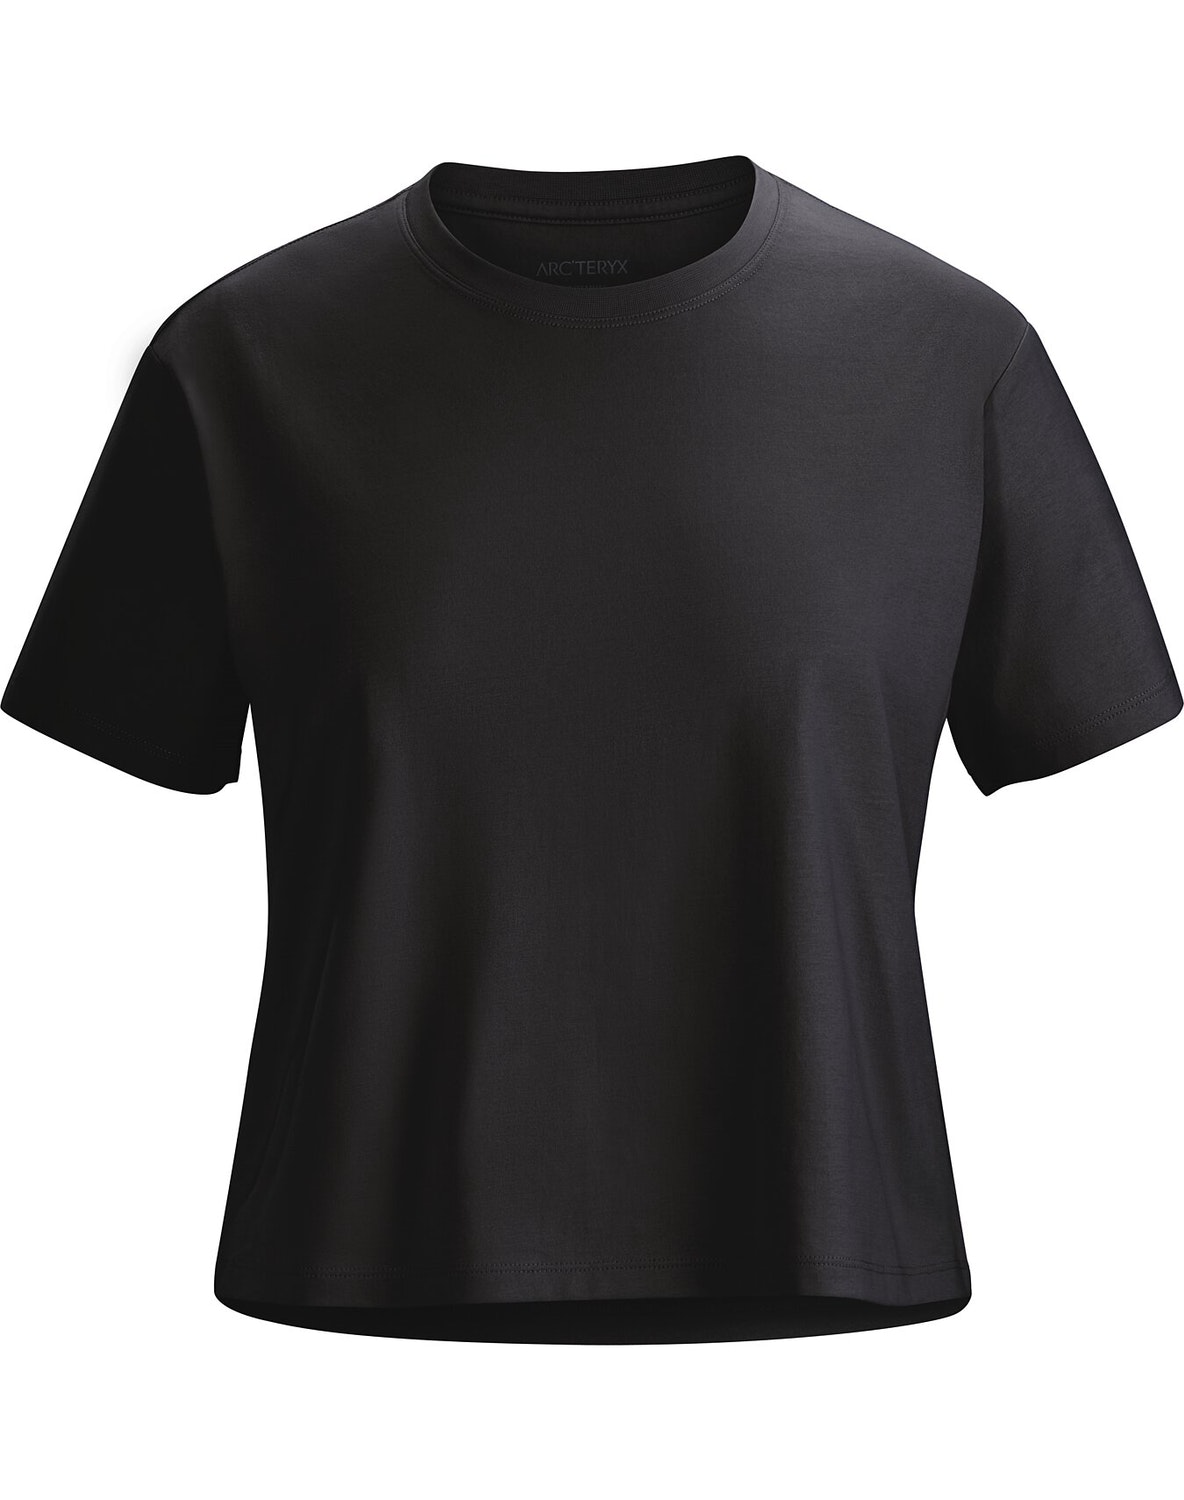 T-shirt Arc'teryx Cinder Donna Nere - IT-6137613